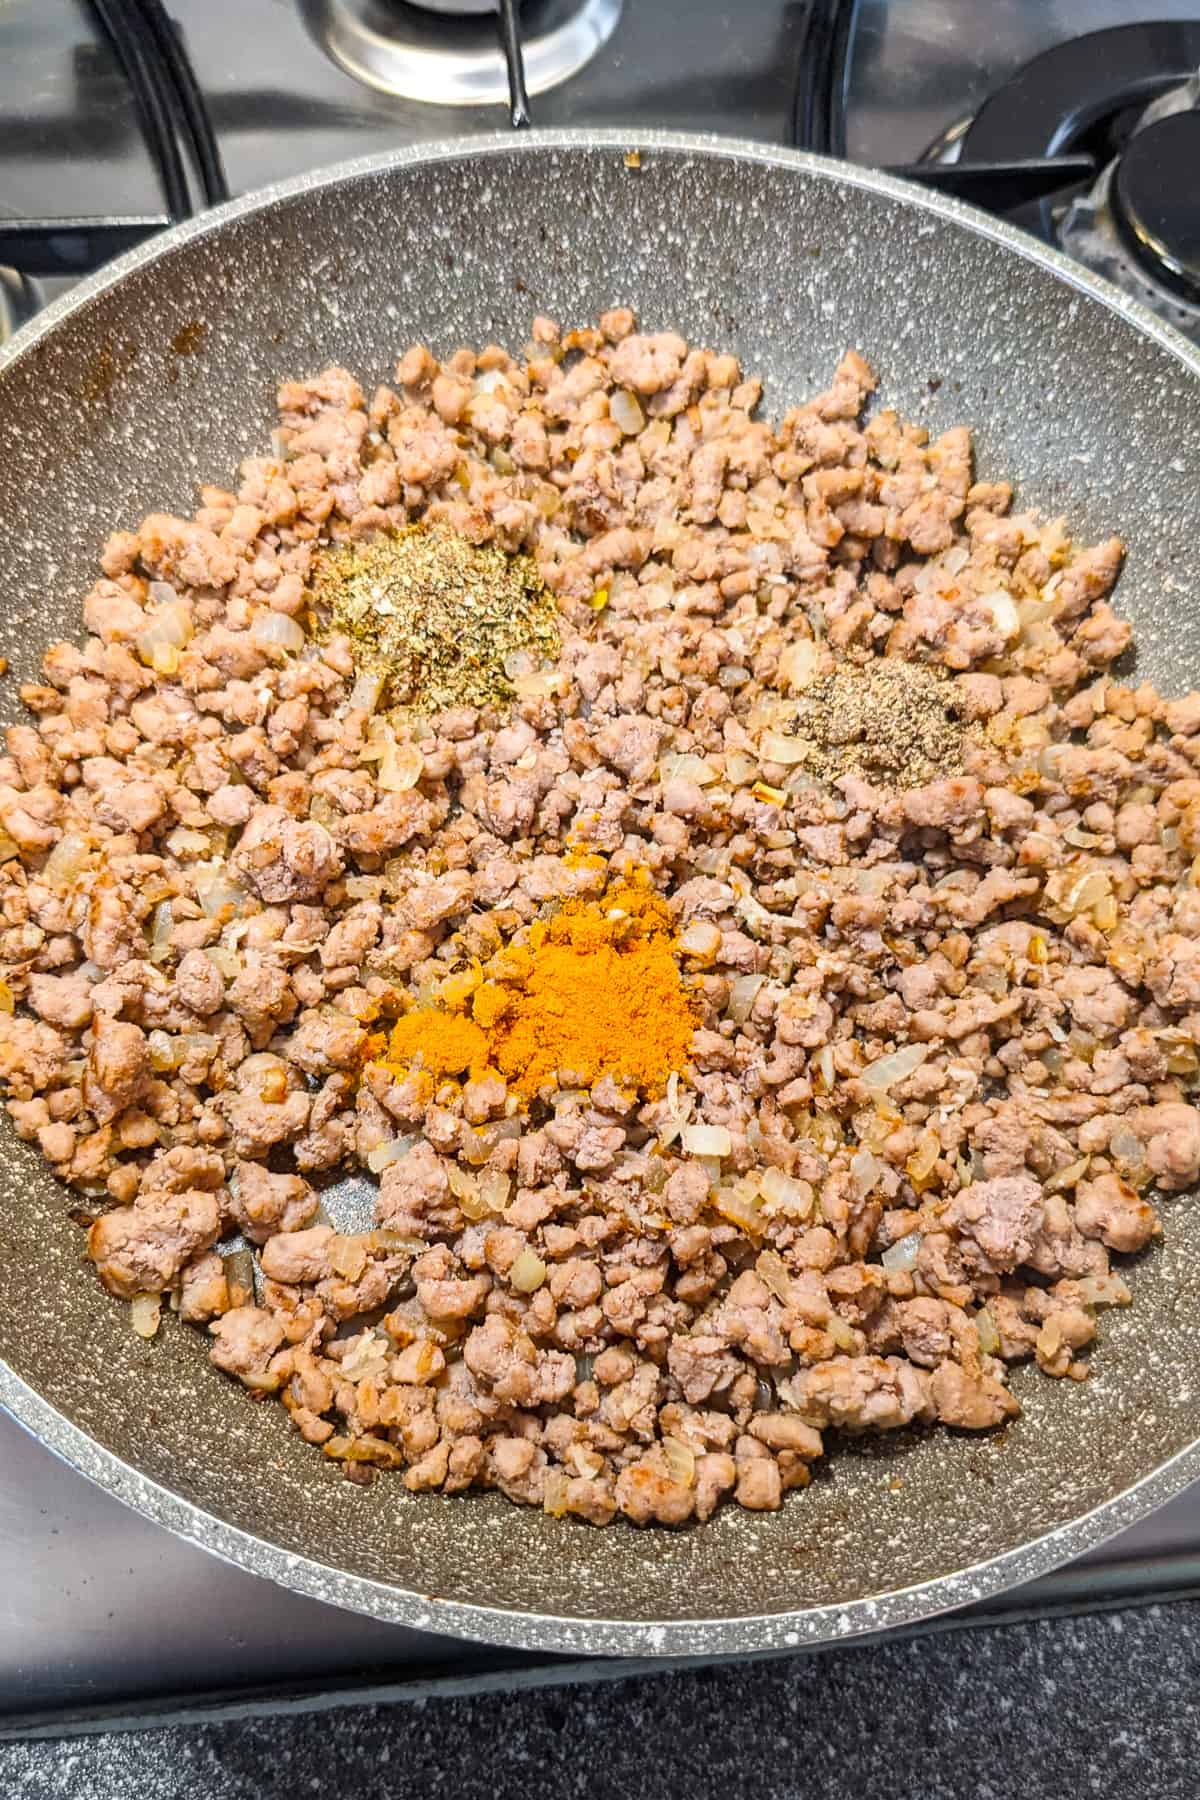 Fried minced beef with curcuma, cumin and oregano in a frying pan.